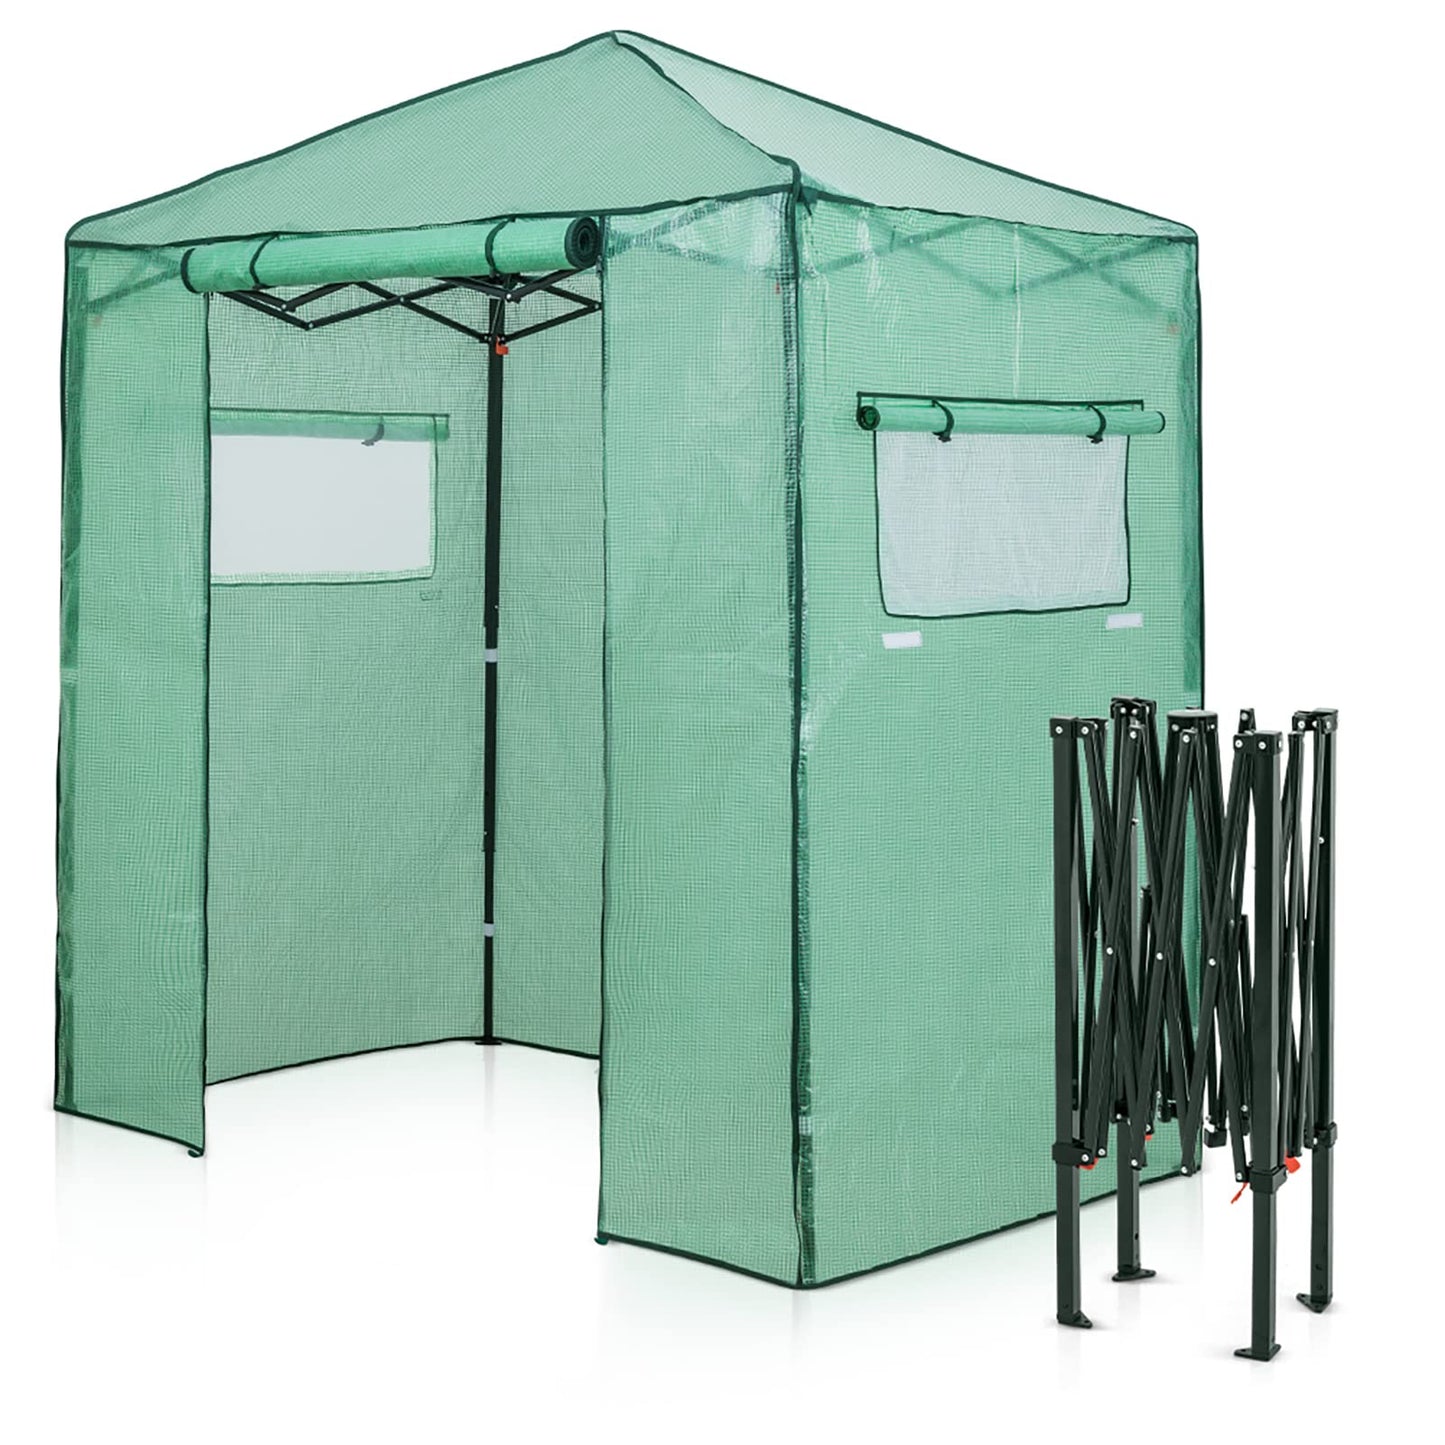 Greenhouse Portable Walk-in Fast Setup